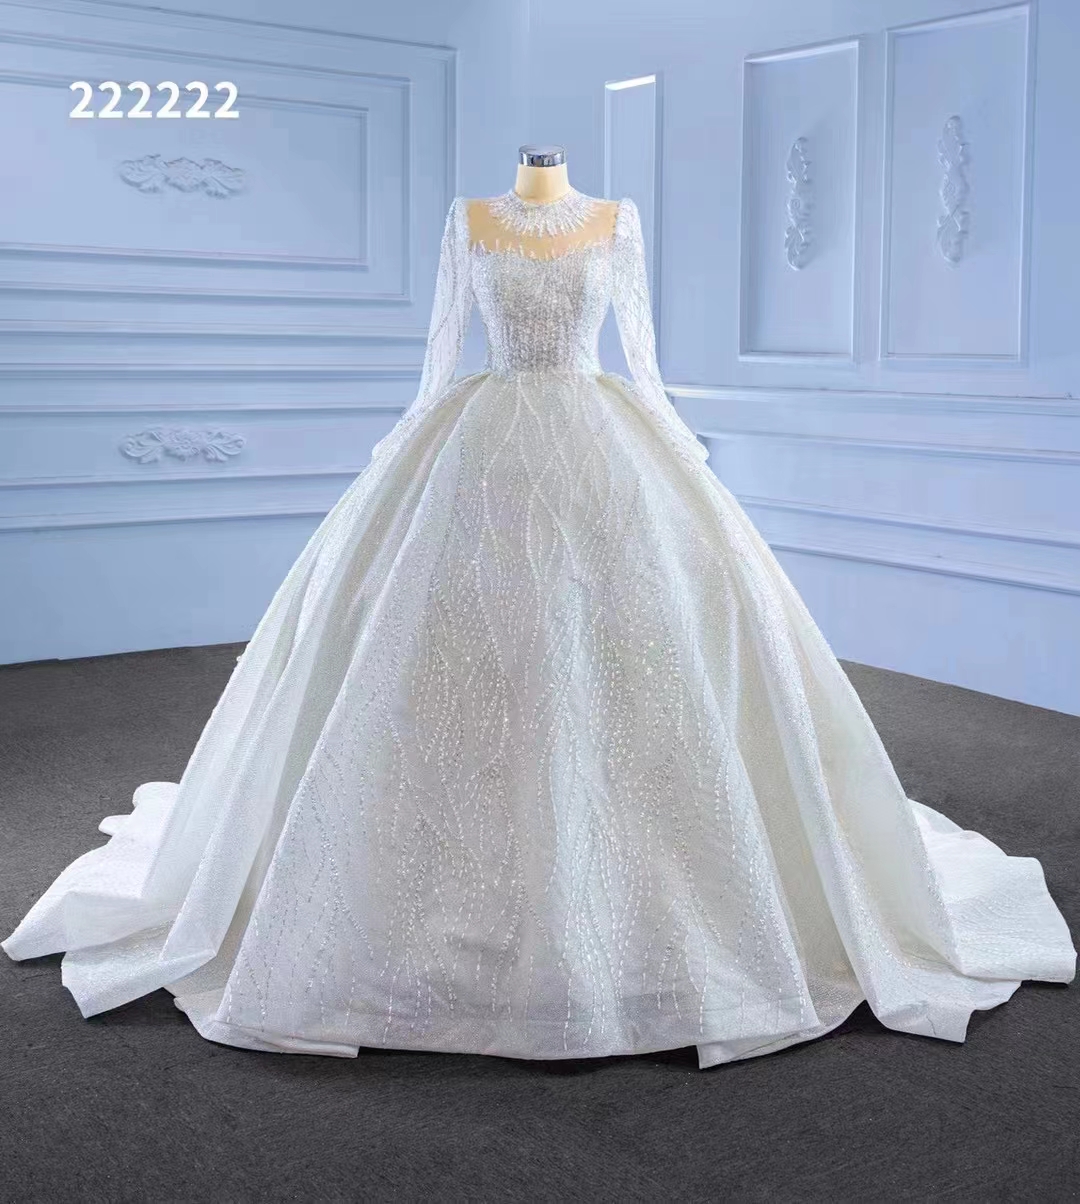 White high collar wedding dress Long sleeve pearl Luxury tulle Bride backless handwork SM222222